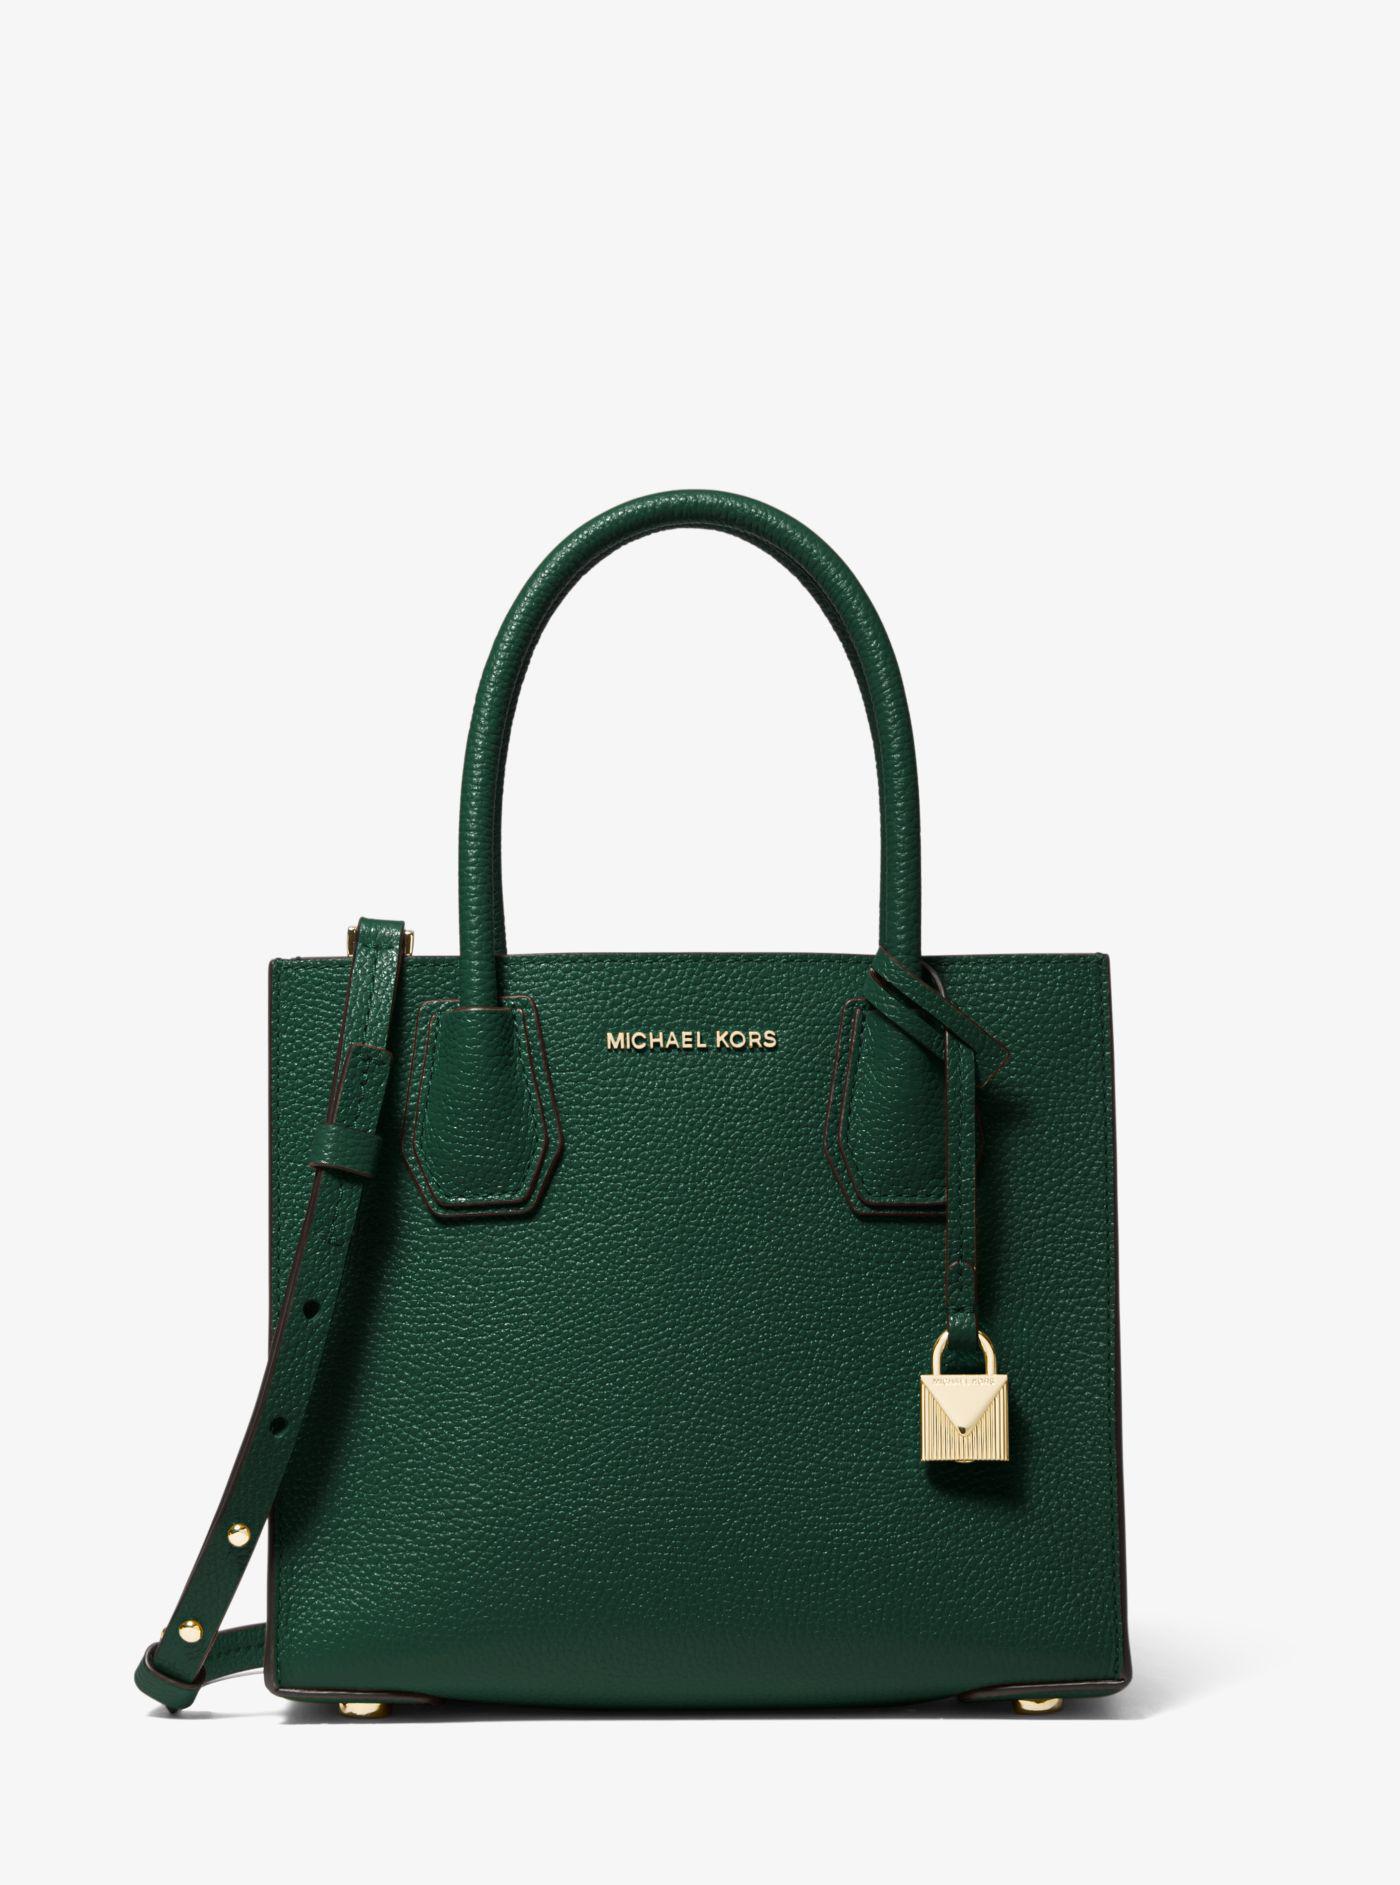 Top 53+ imagen michael kors dark green purse